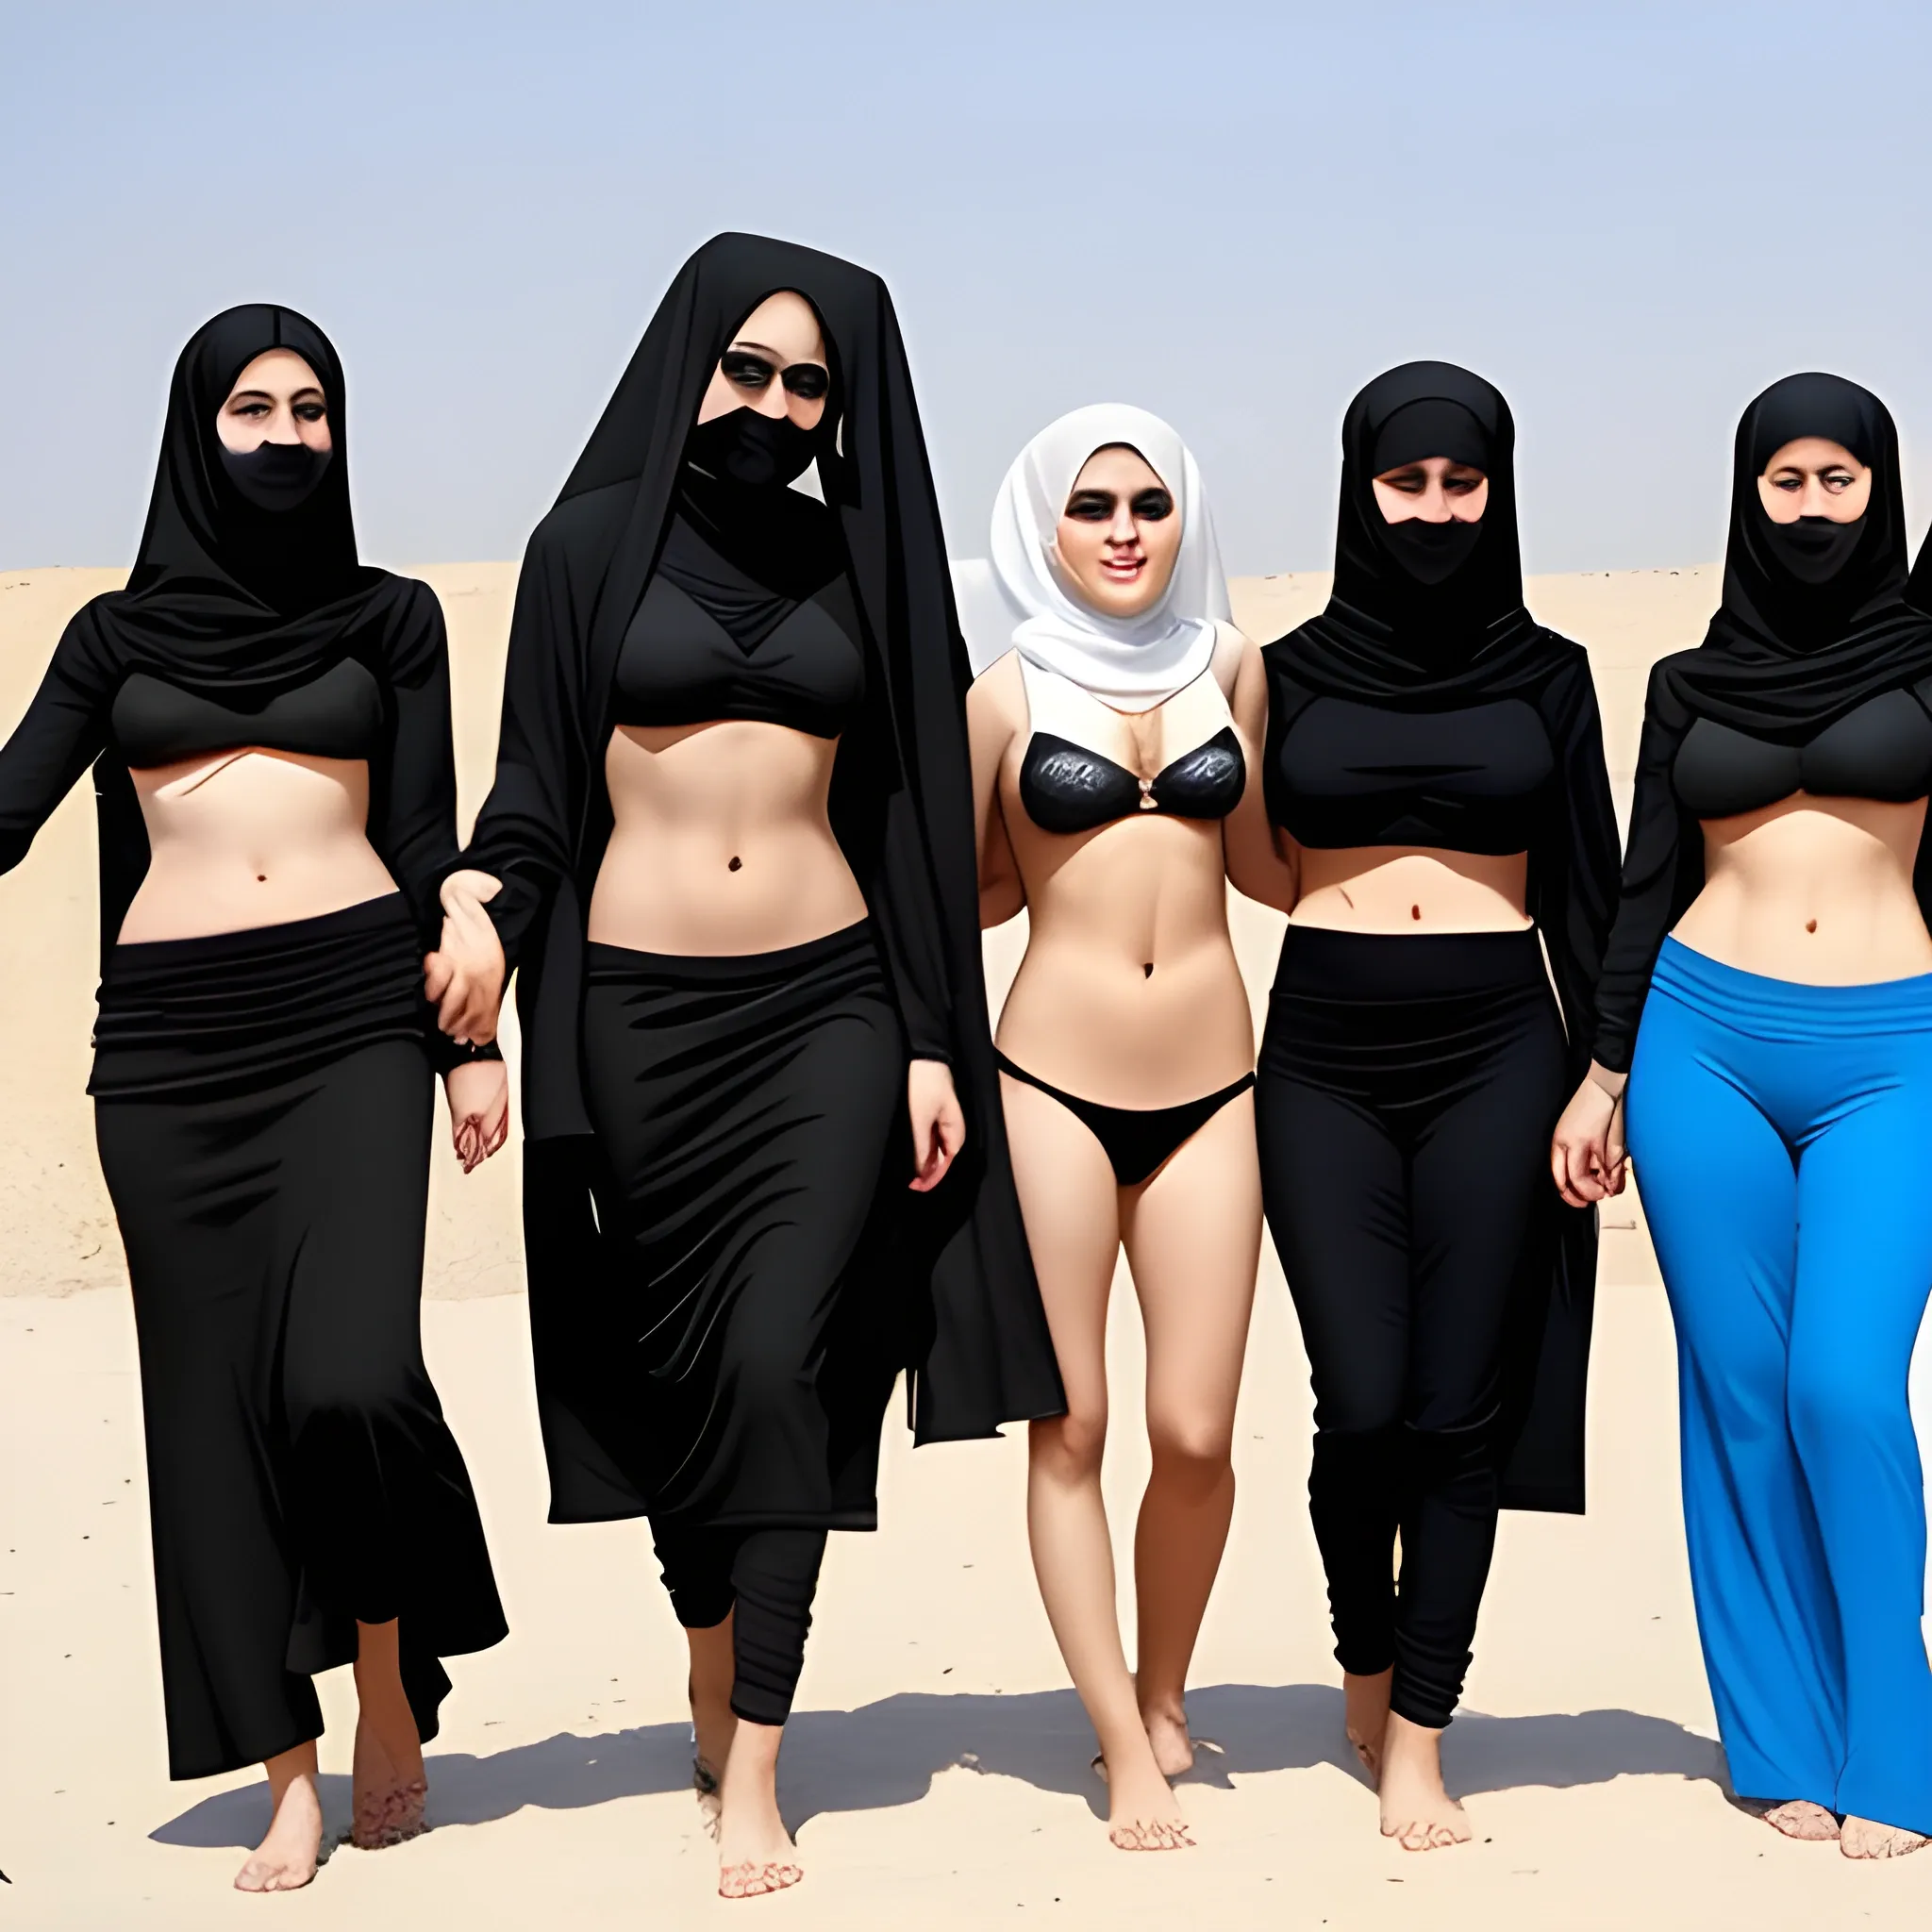  Iranian woman with a chador hijab - bikini- five people